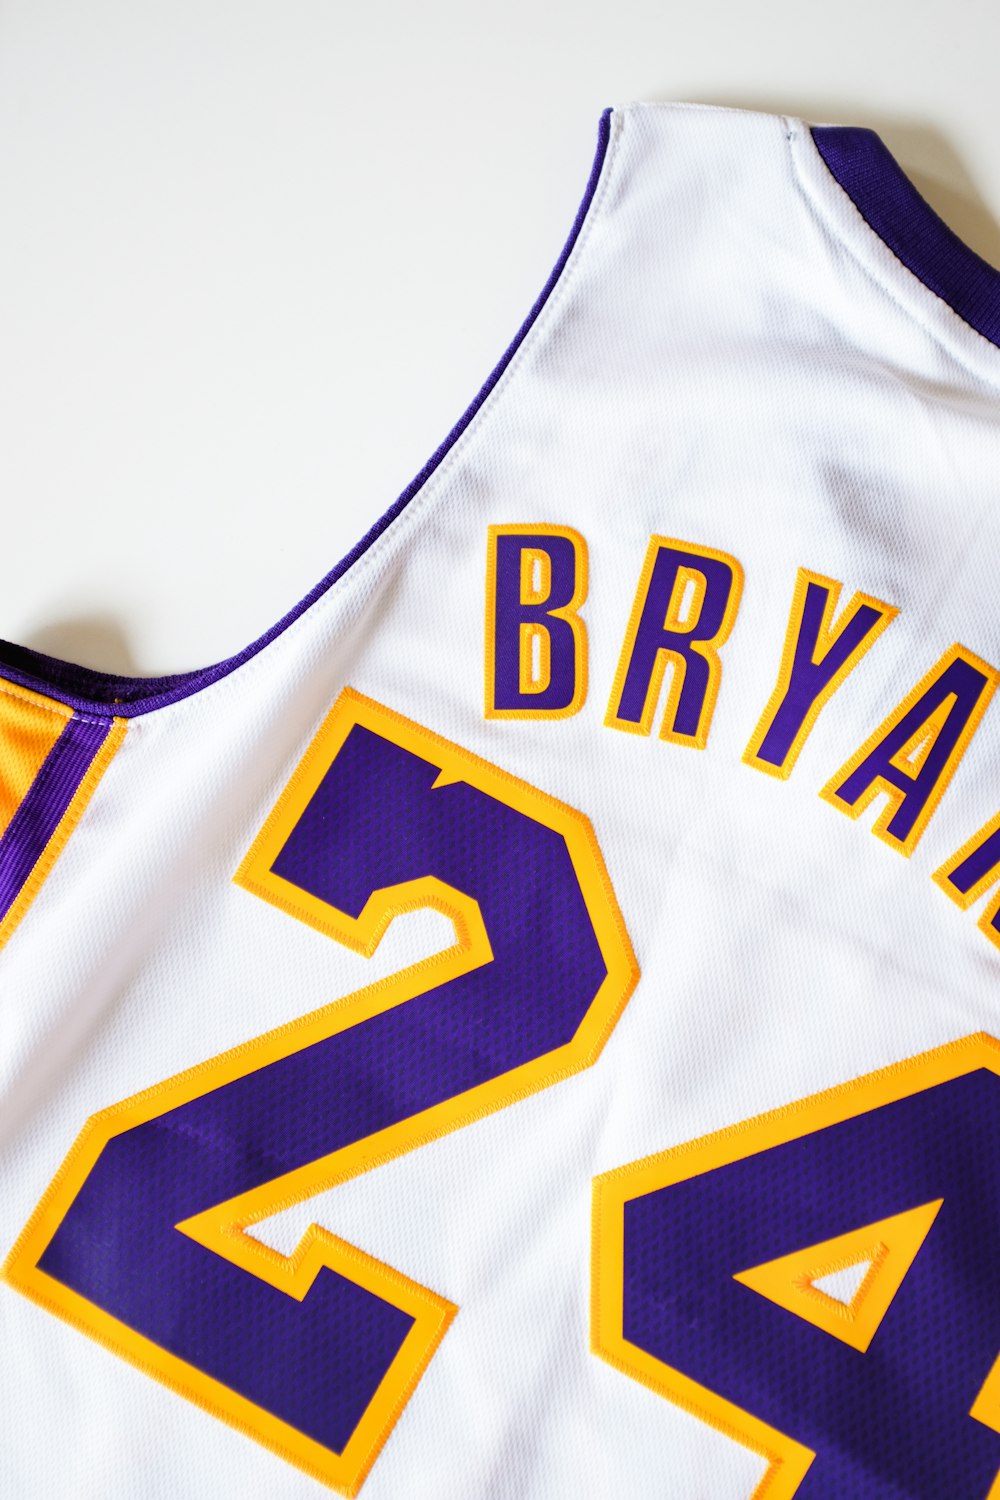 Kobe Bryant, camiseta de la NBA de los Lakers #24